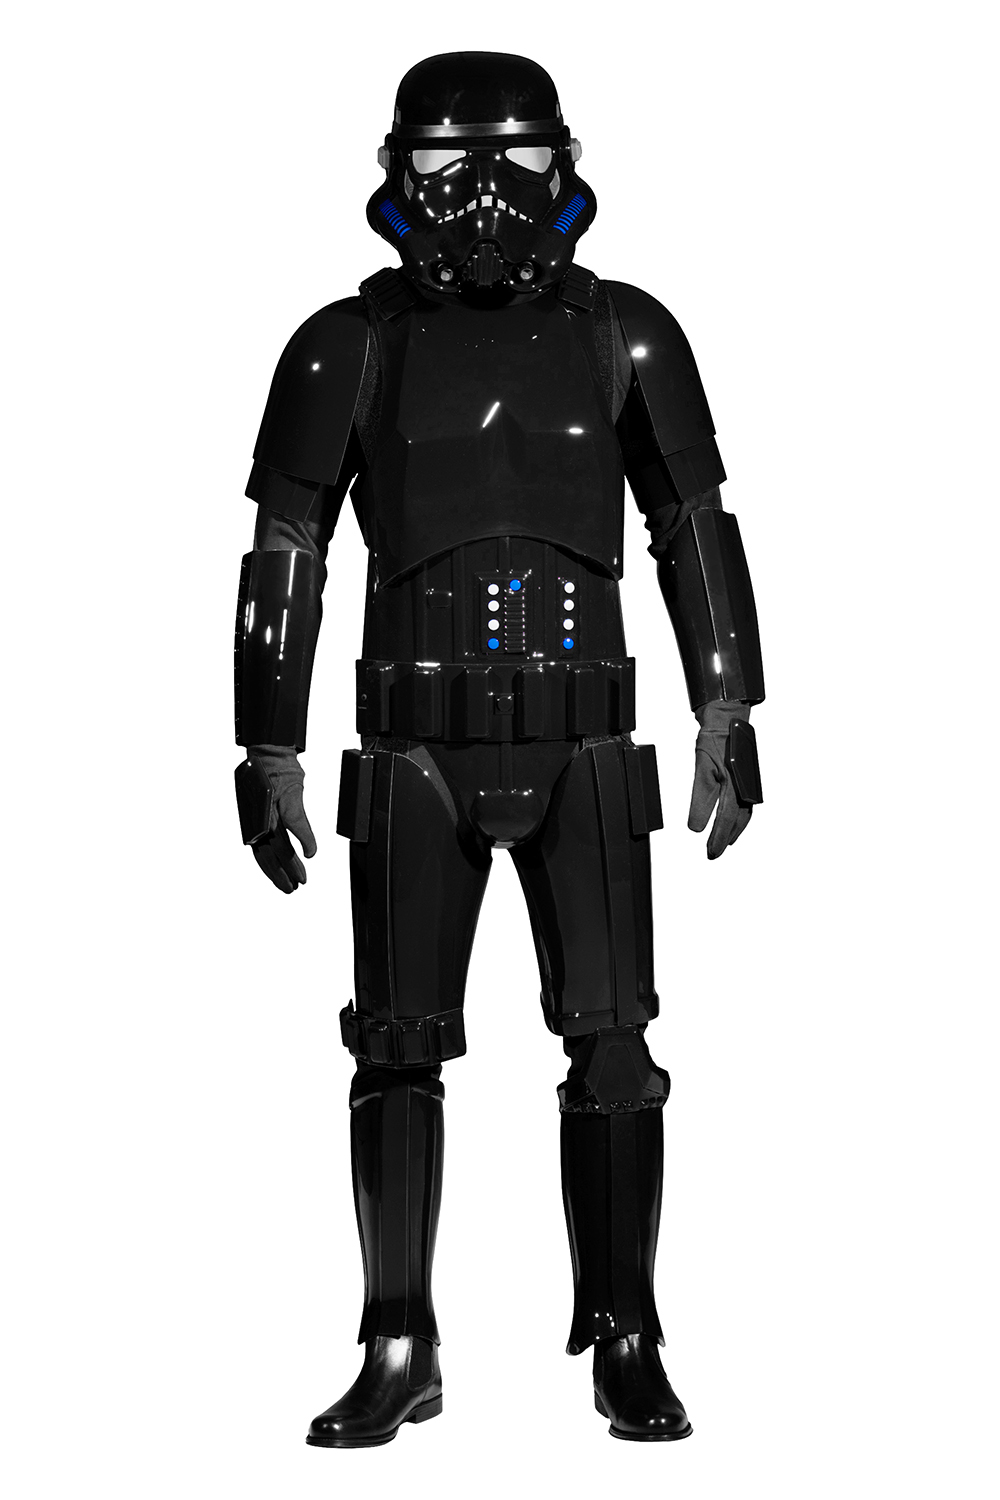 Shadowtrooper costumer from JediRobeAmerica.com